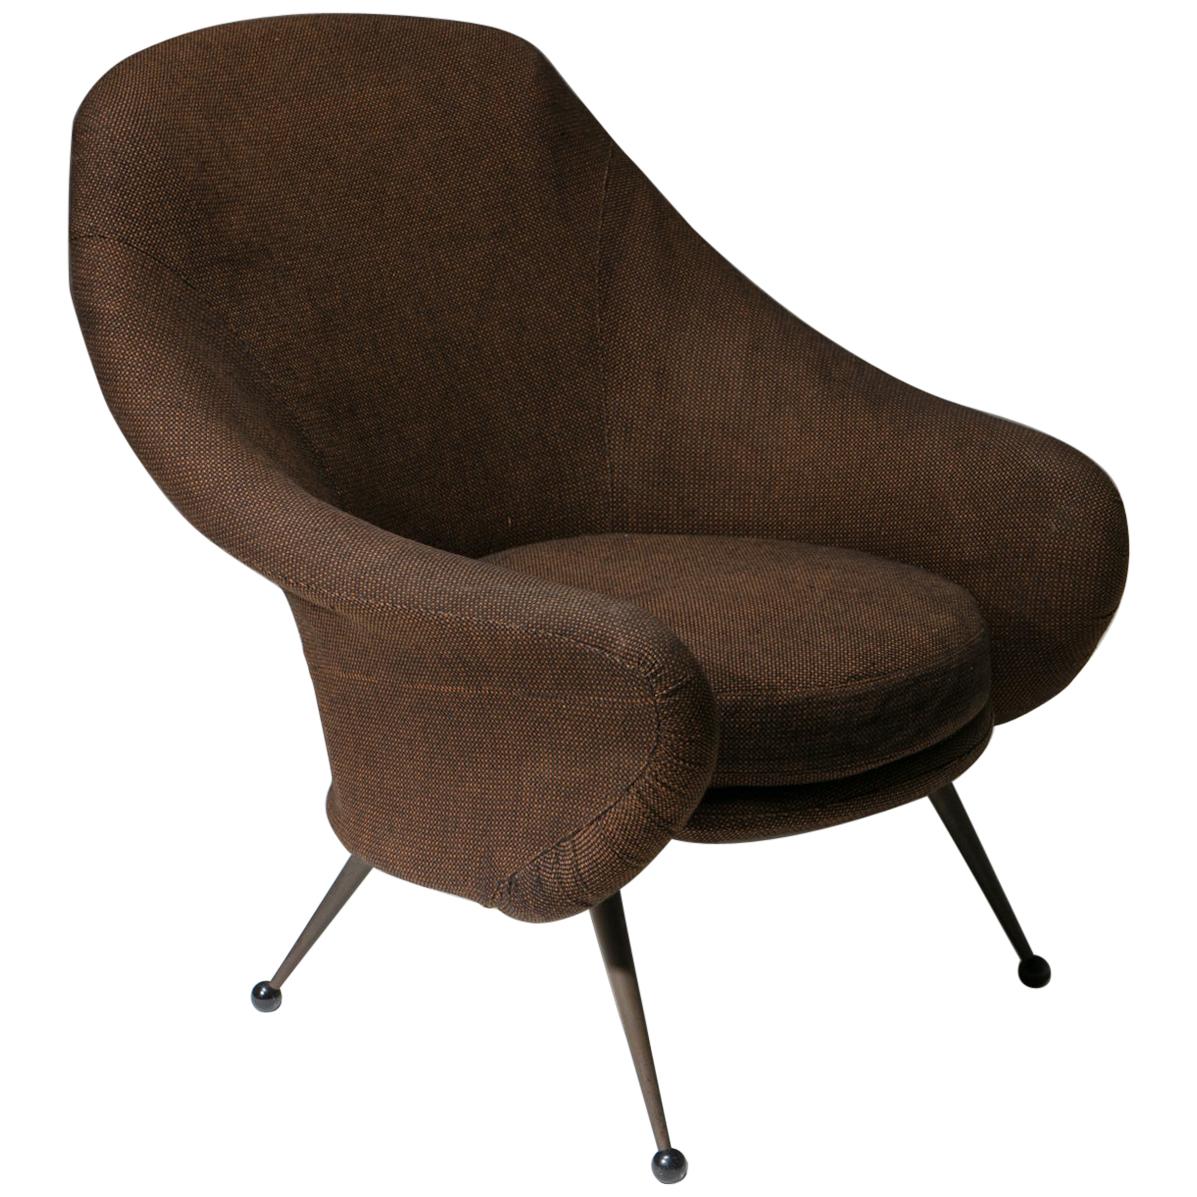 "Martingala" Lounge Chair by Marco Zanuso for Arflex